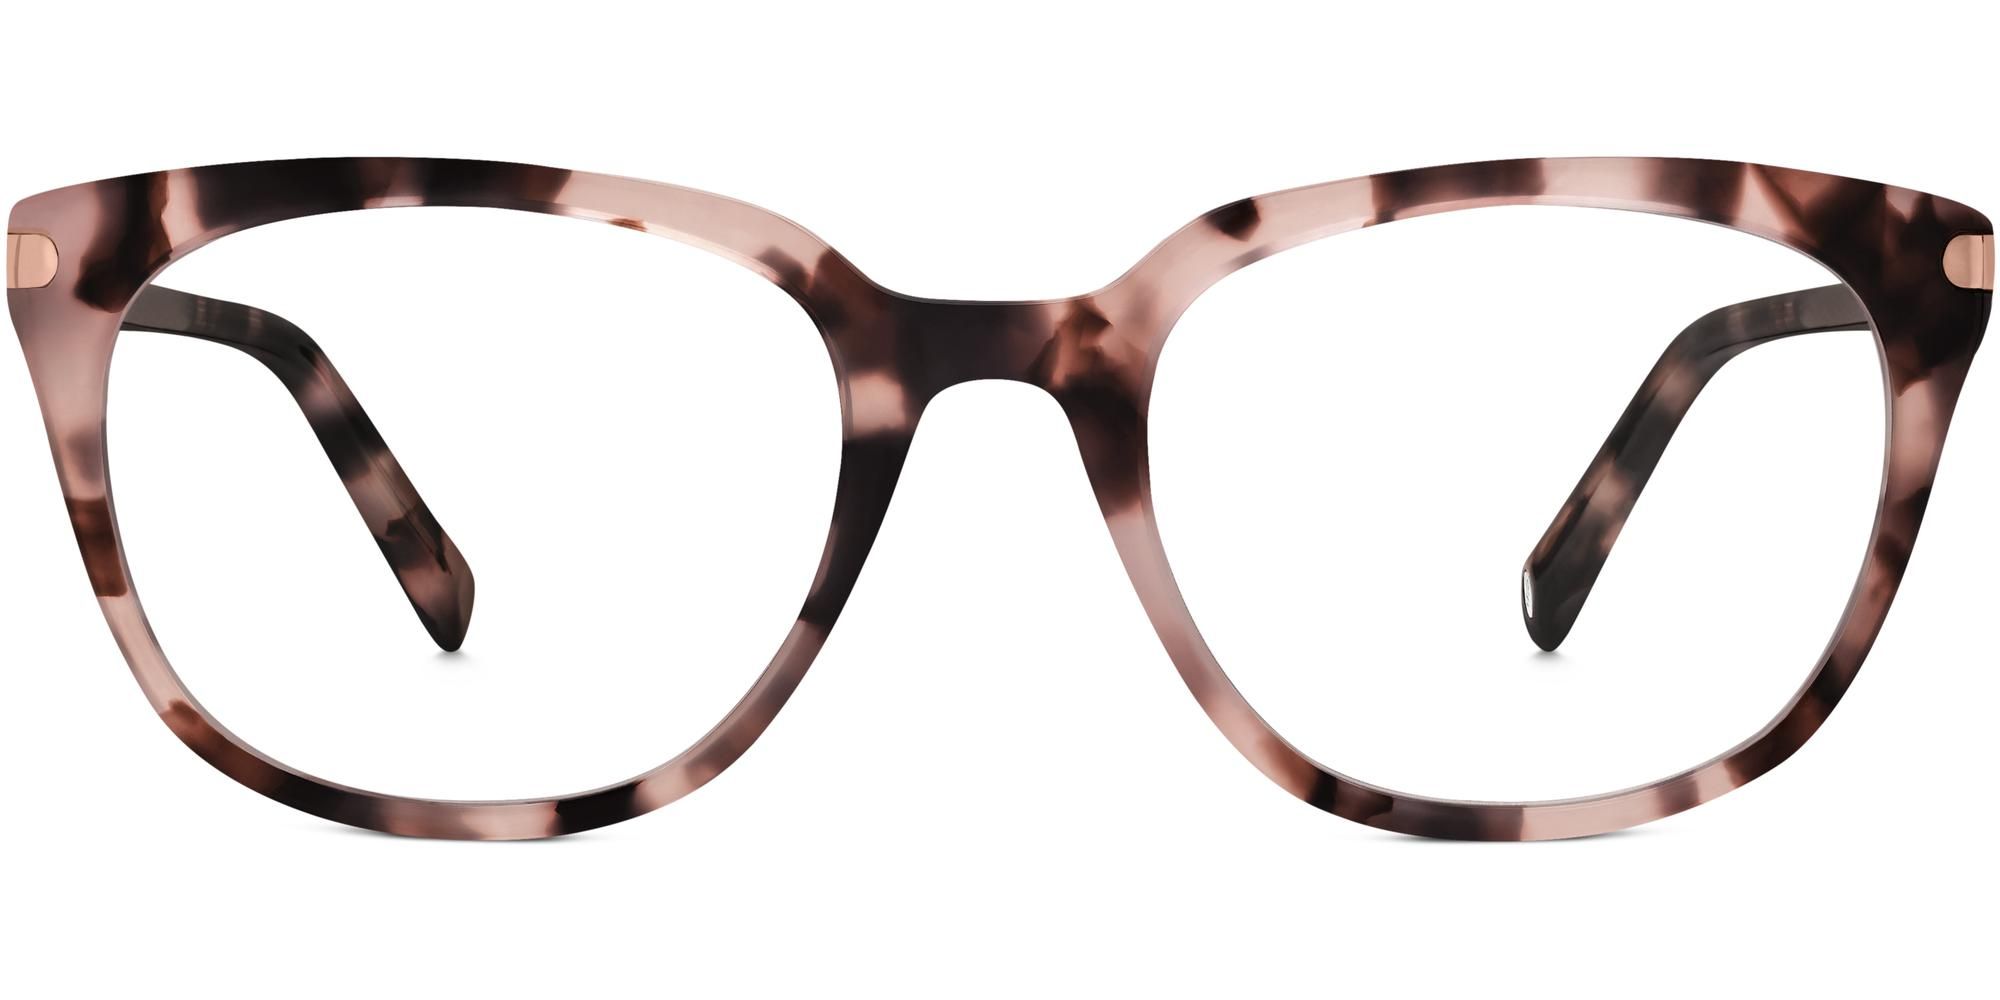 Maeve Eyeglasses in Blush Tortoise for Women | Warby Parker